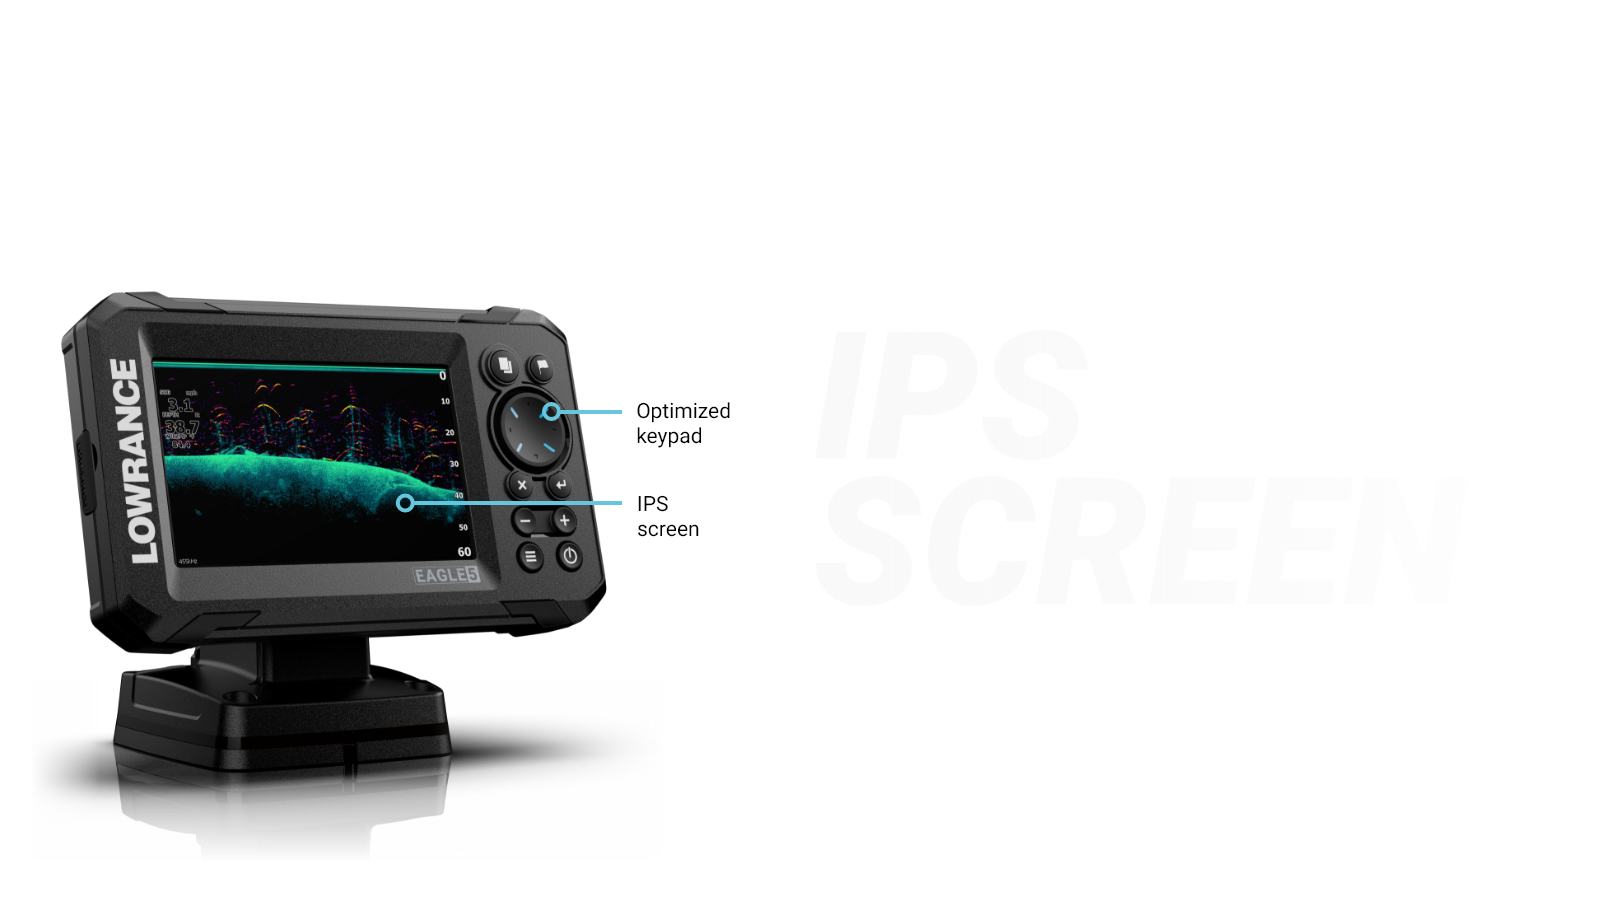 New IPS screens